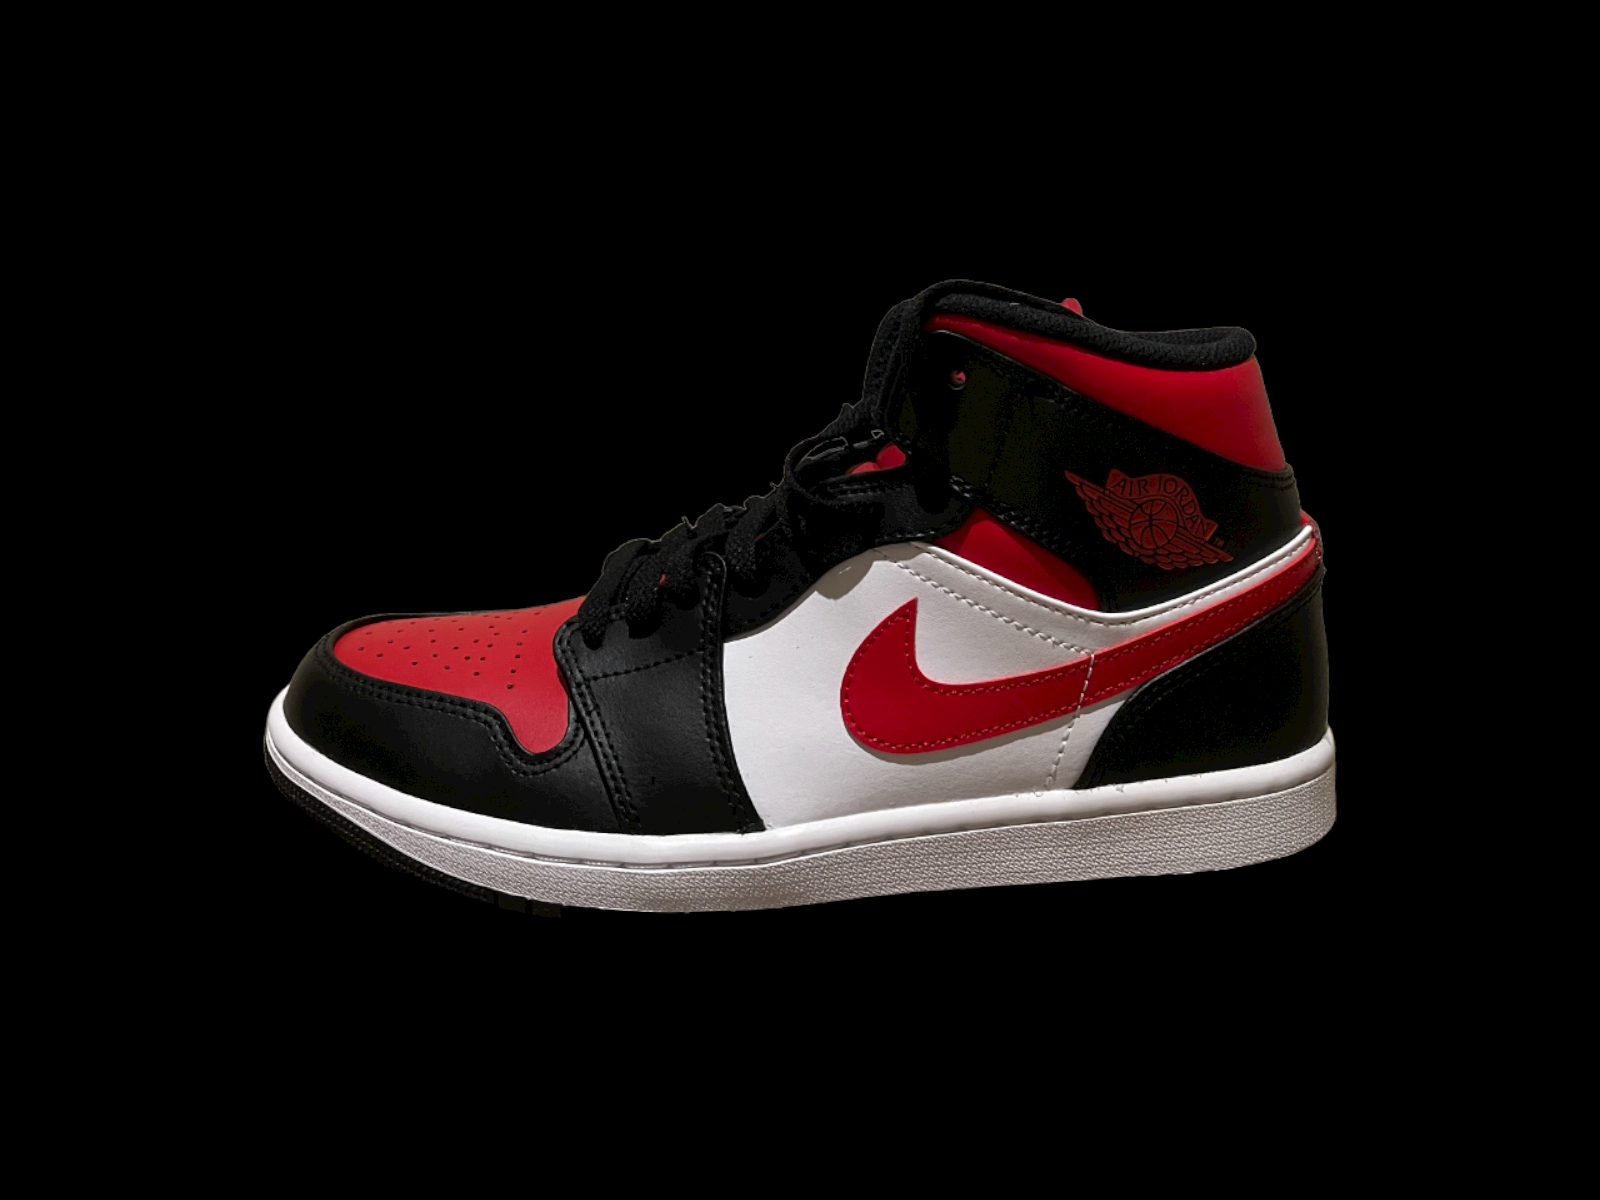 Nike Air Jordan Mid Bred Toe image